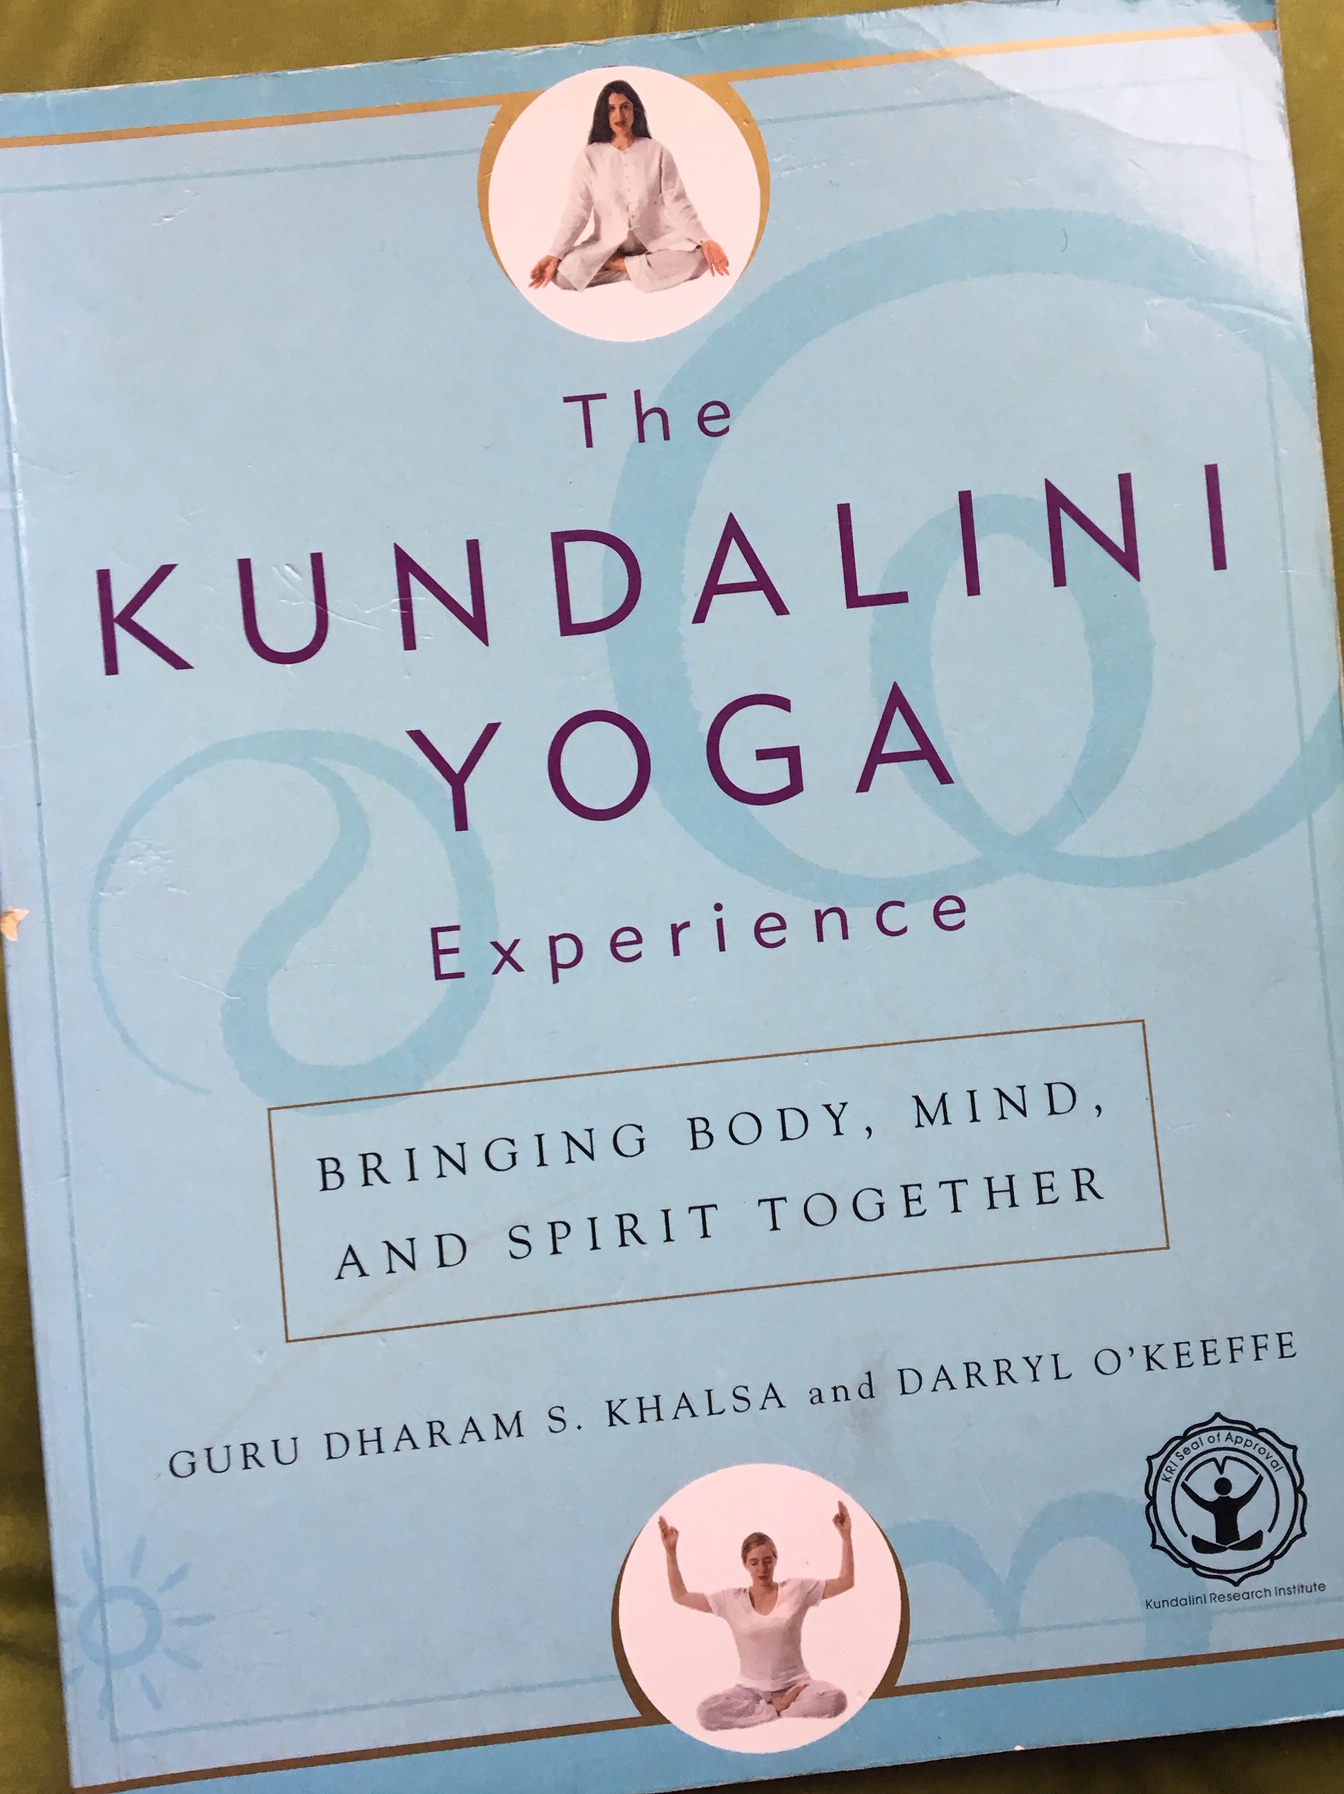 Kundalini Yoga books to inspire and educate — Kundalini Yoga with Daria -  High On Yoga - Manchester